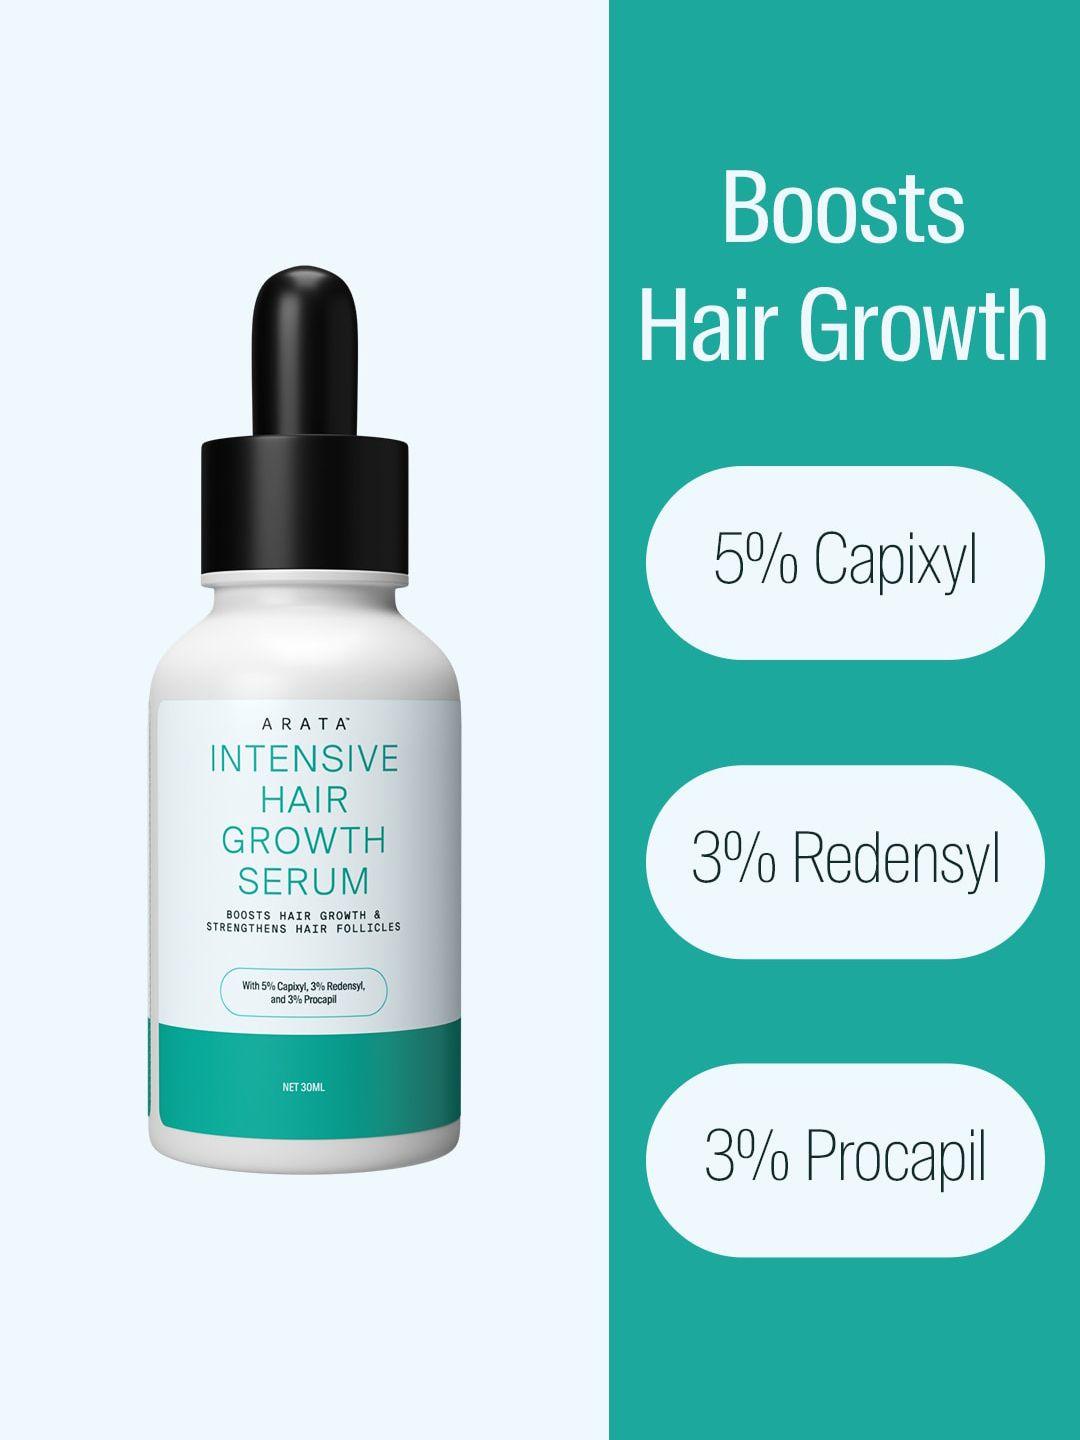 arata intensive hair growth serum with 5% capixyl+3% redensyl+3% procapil - 30 ml